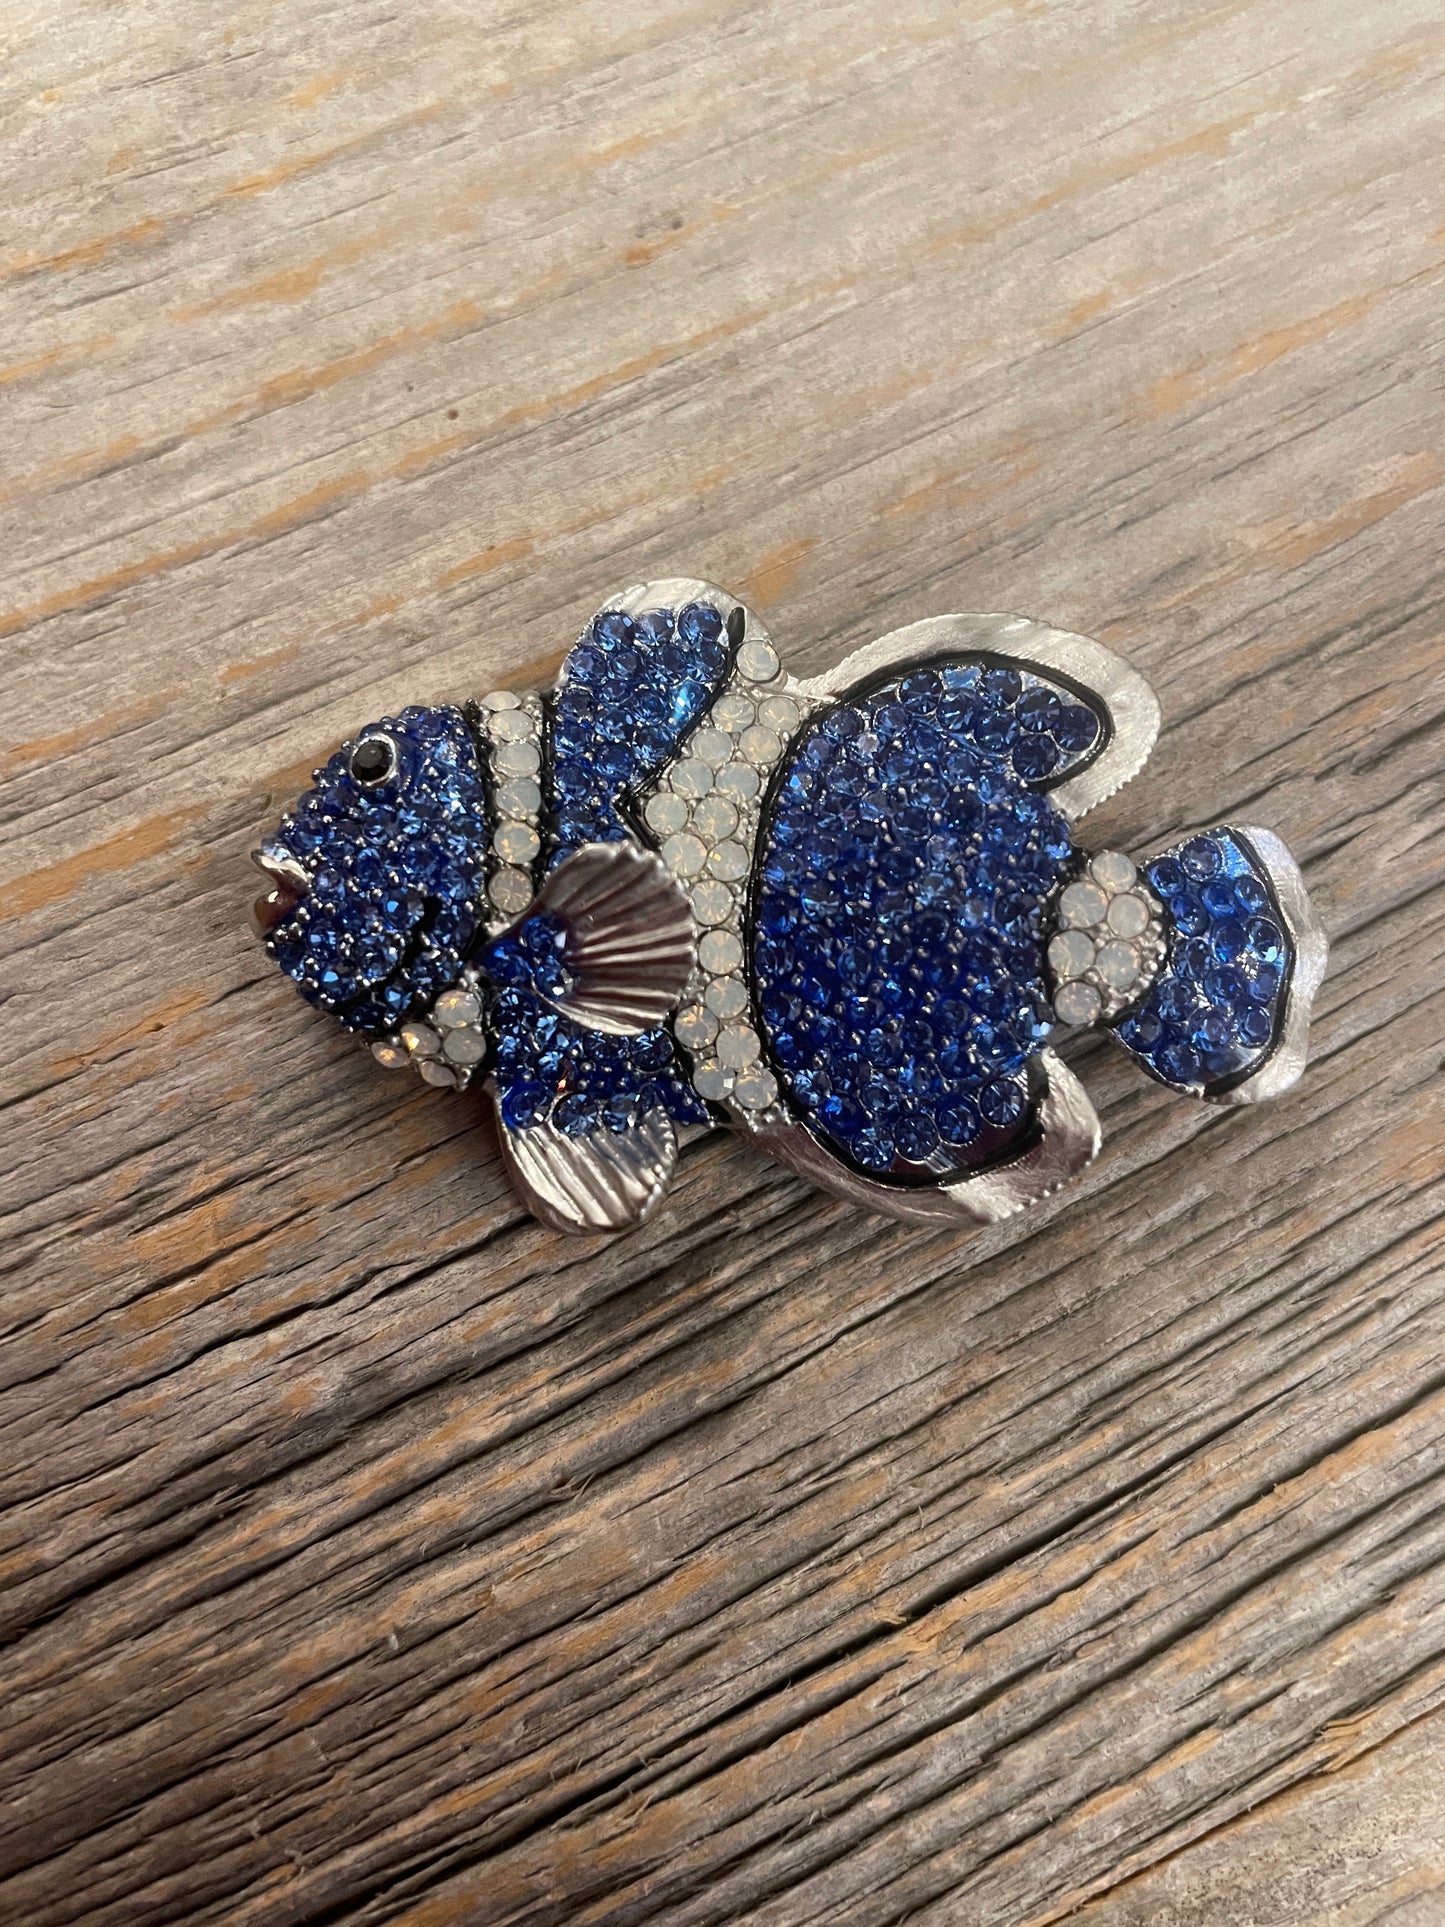 Rhinestone Fish Blue and White Brooch Pin